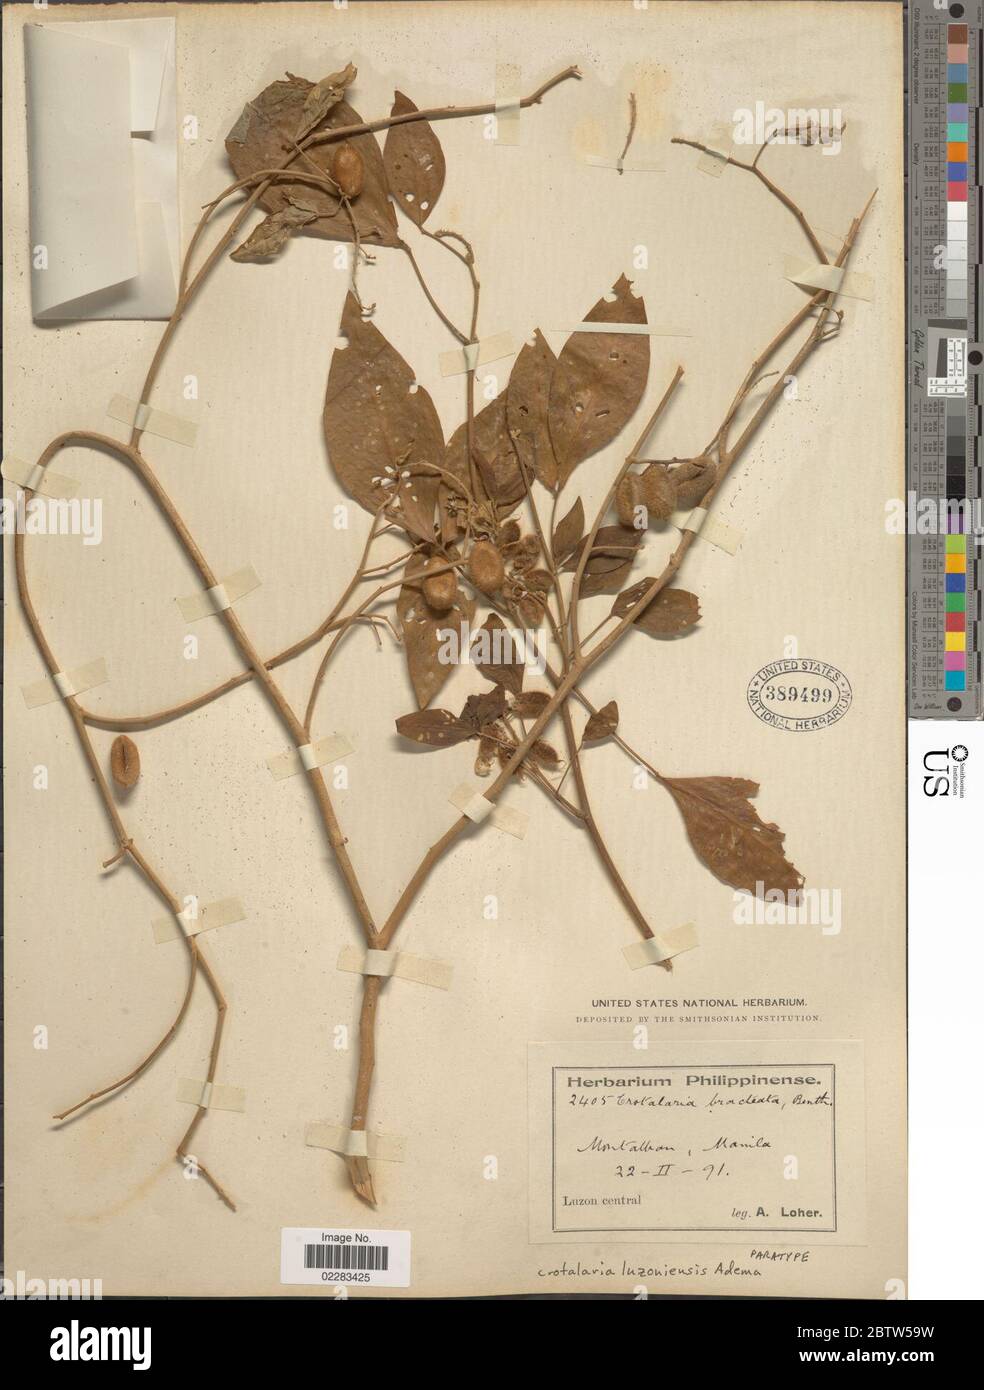 Crotalaria luzoniensis Adema. Stock Photo